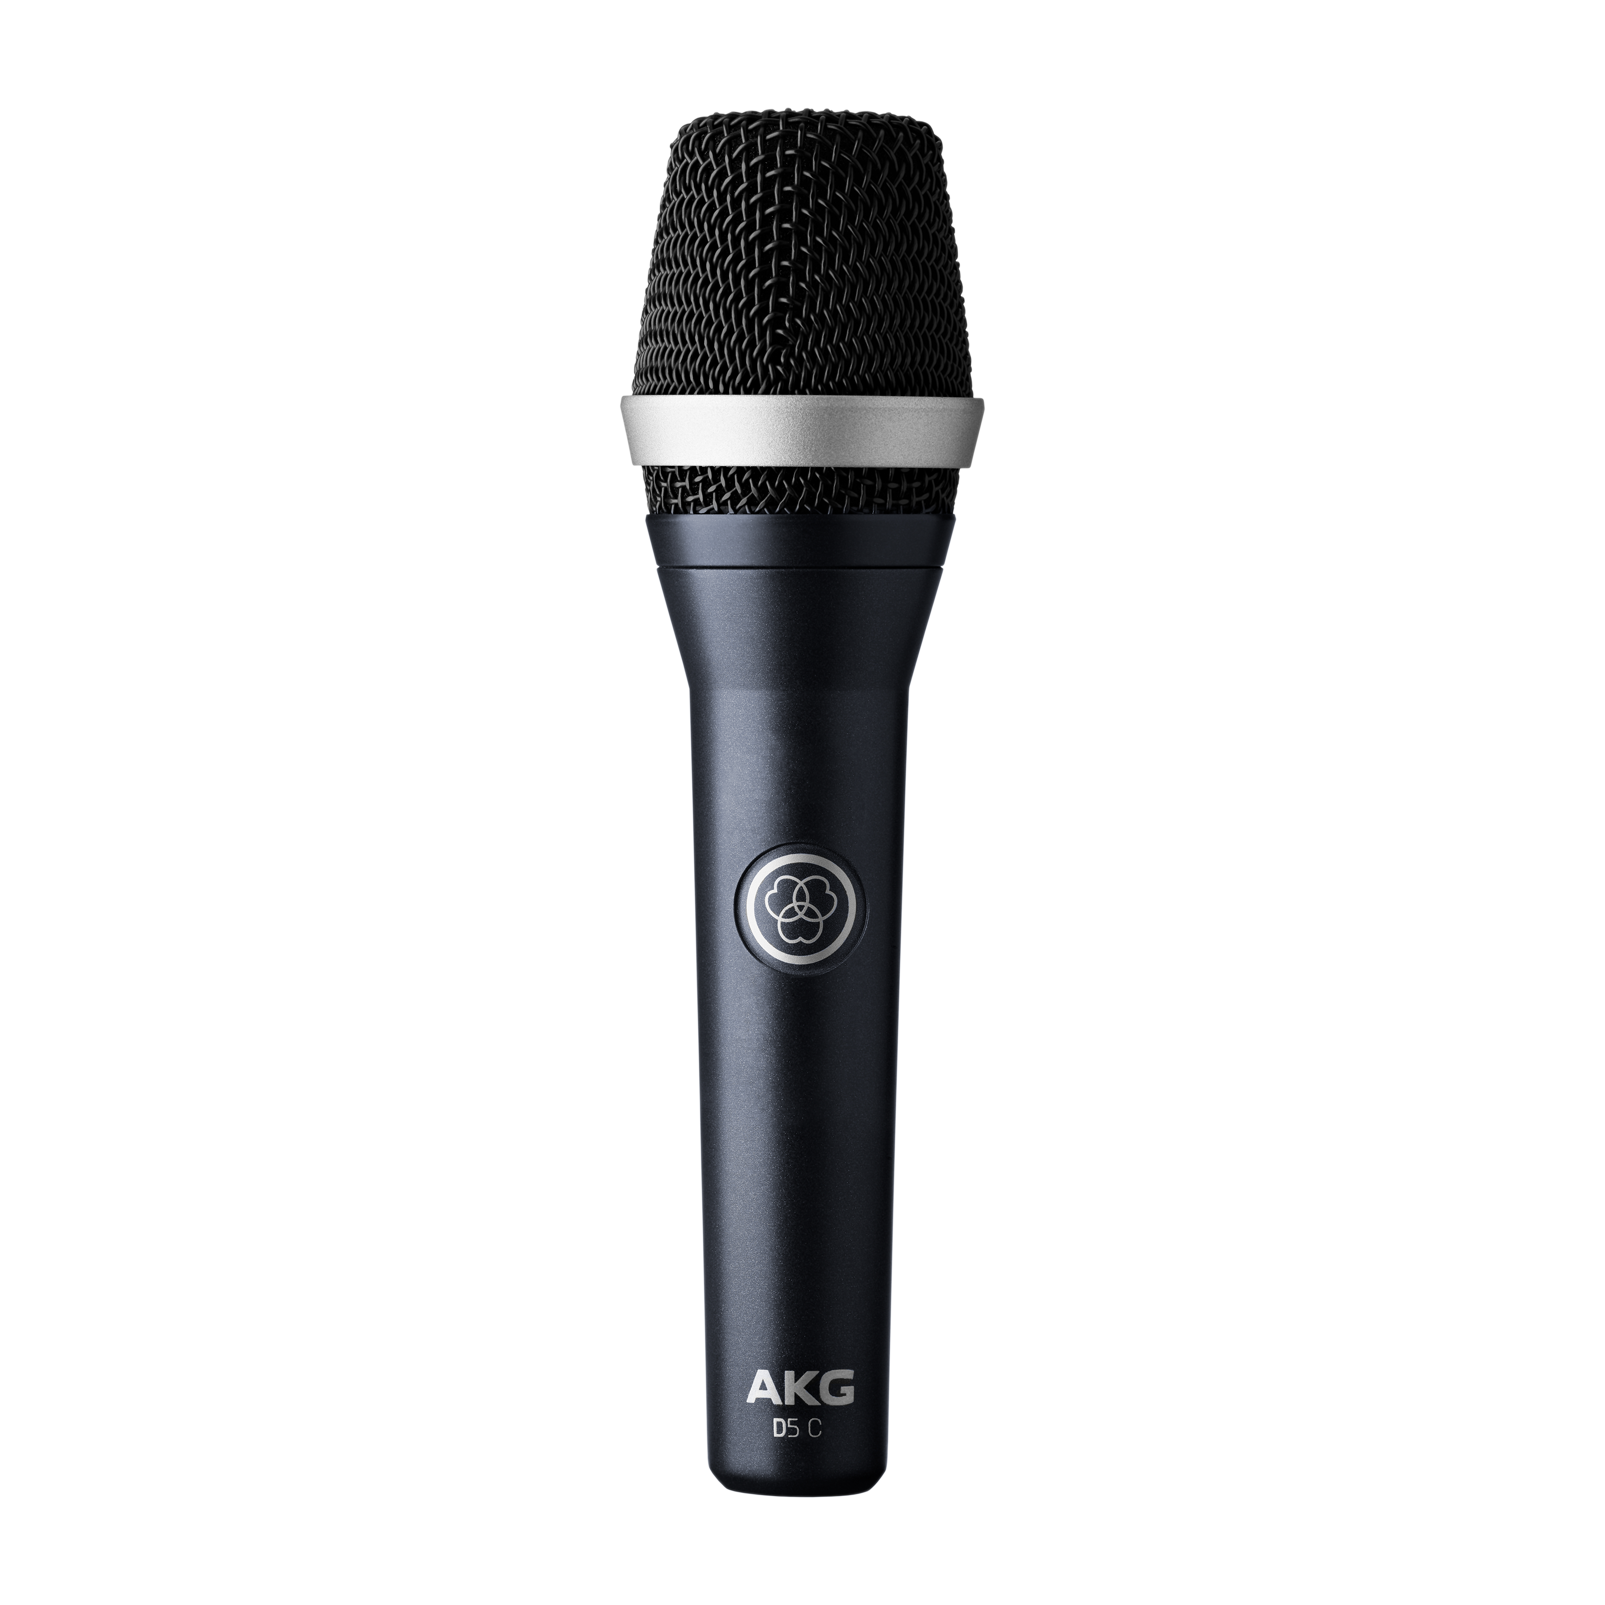 D5 C - Dark Blue - Professional dynamic cardioid vocal microphone - Hero